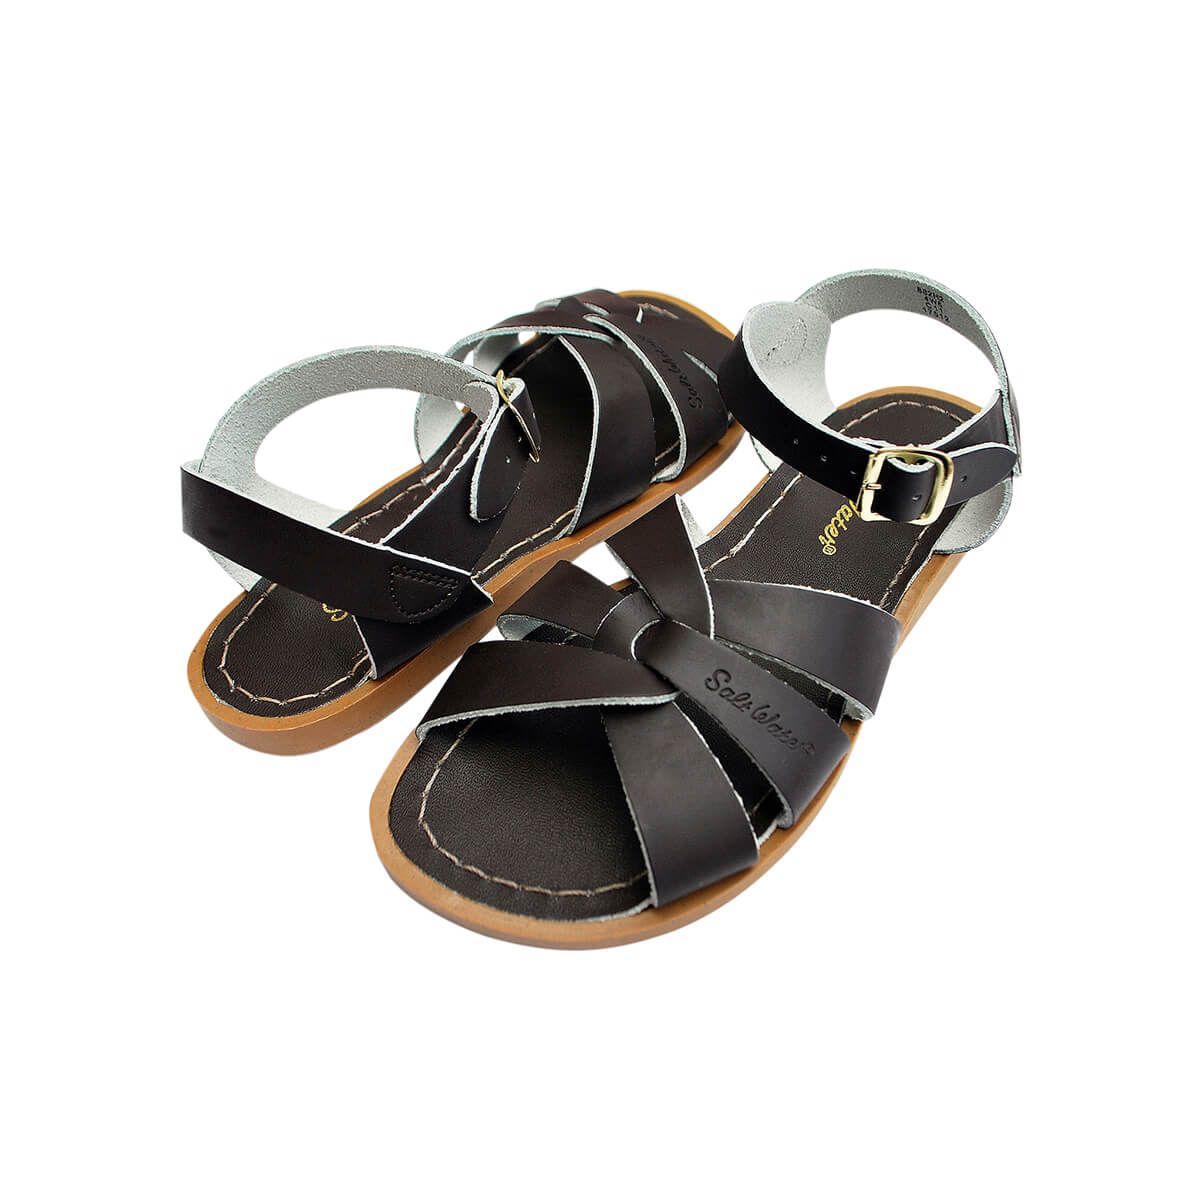 Original Sandals in Brown by Salt-Water – Junior Edition